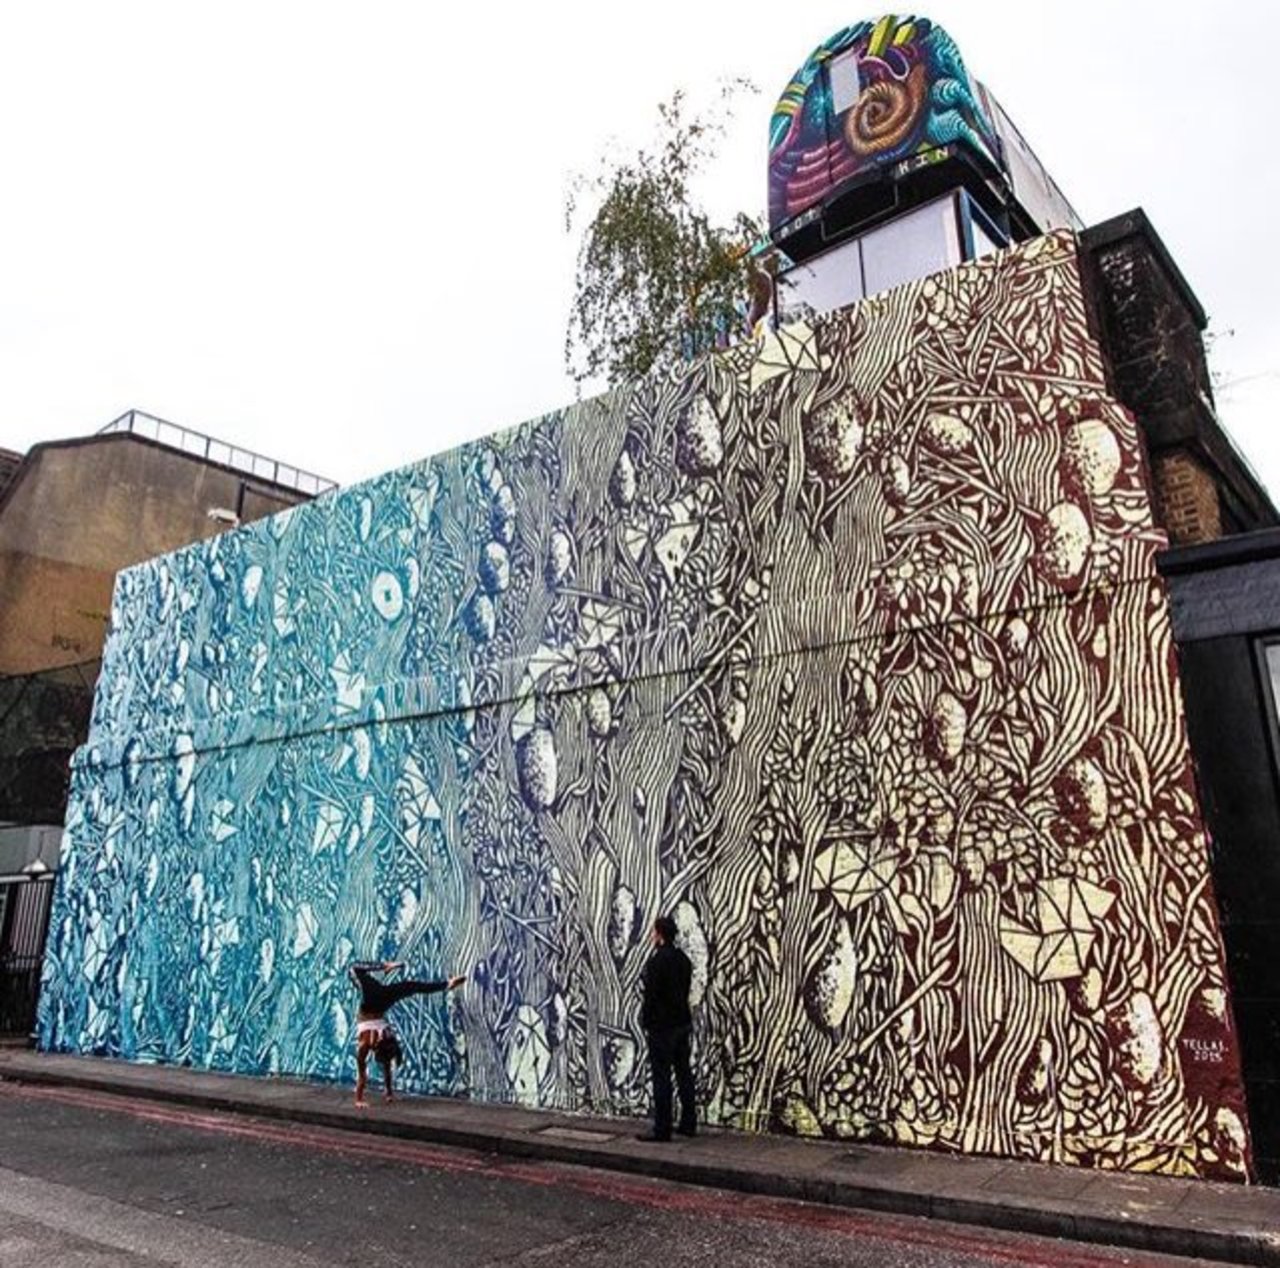 RT: @GoogleStreetArt

New Street Art by Tellas in Shoreditch London 

#art #graffiti #mural #streetart … https://t.co/0YZRFSgPfI